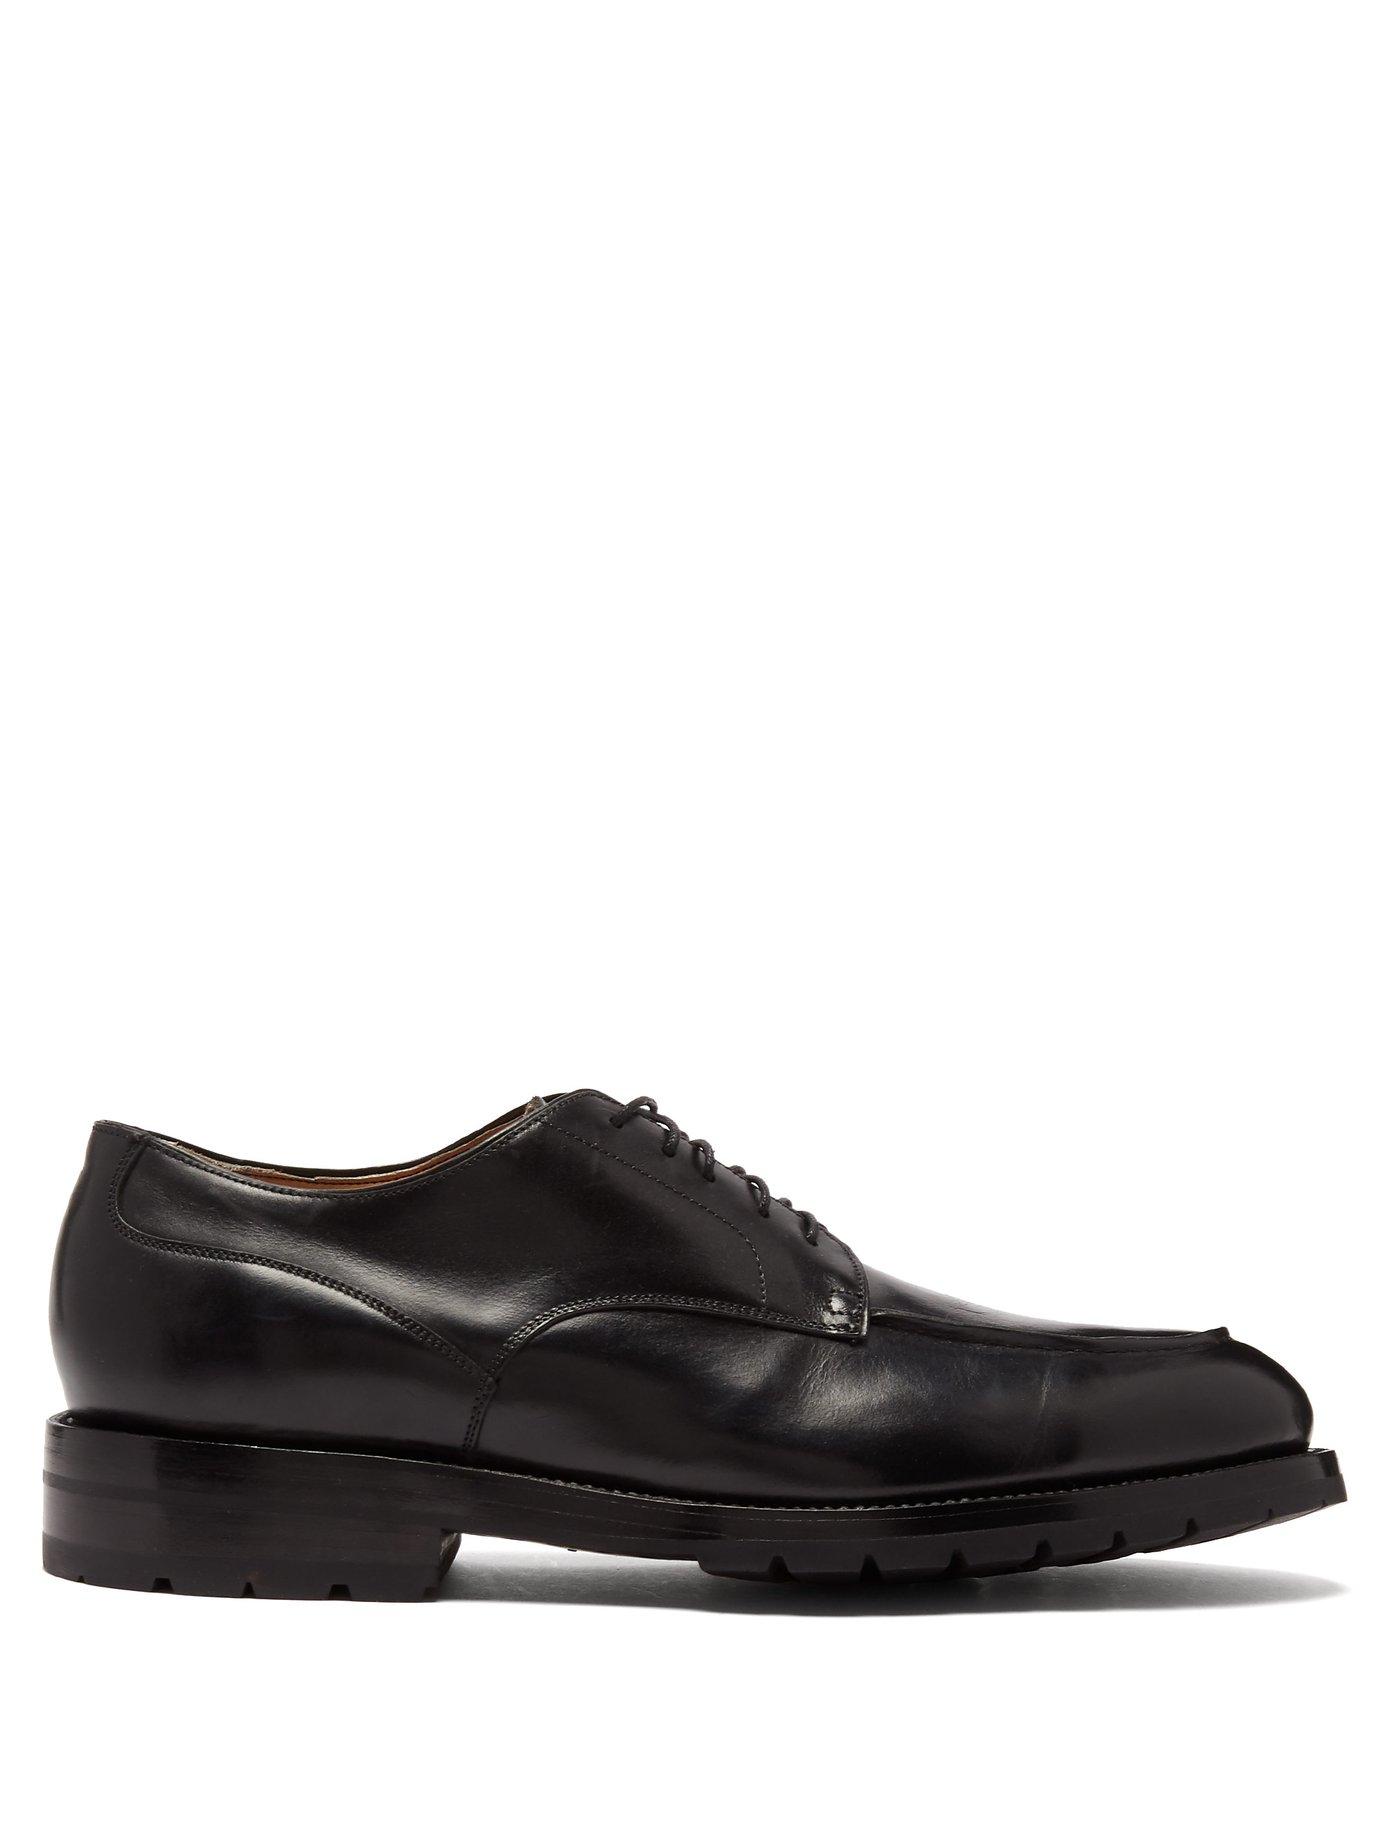 Yuketen Postman Leather Derby Shoes in Black for Men - Lyst